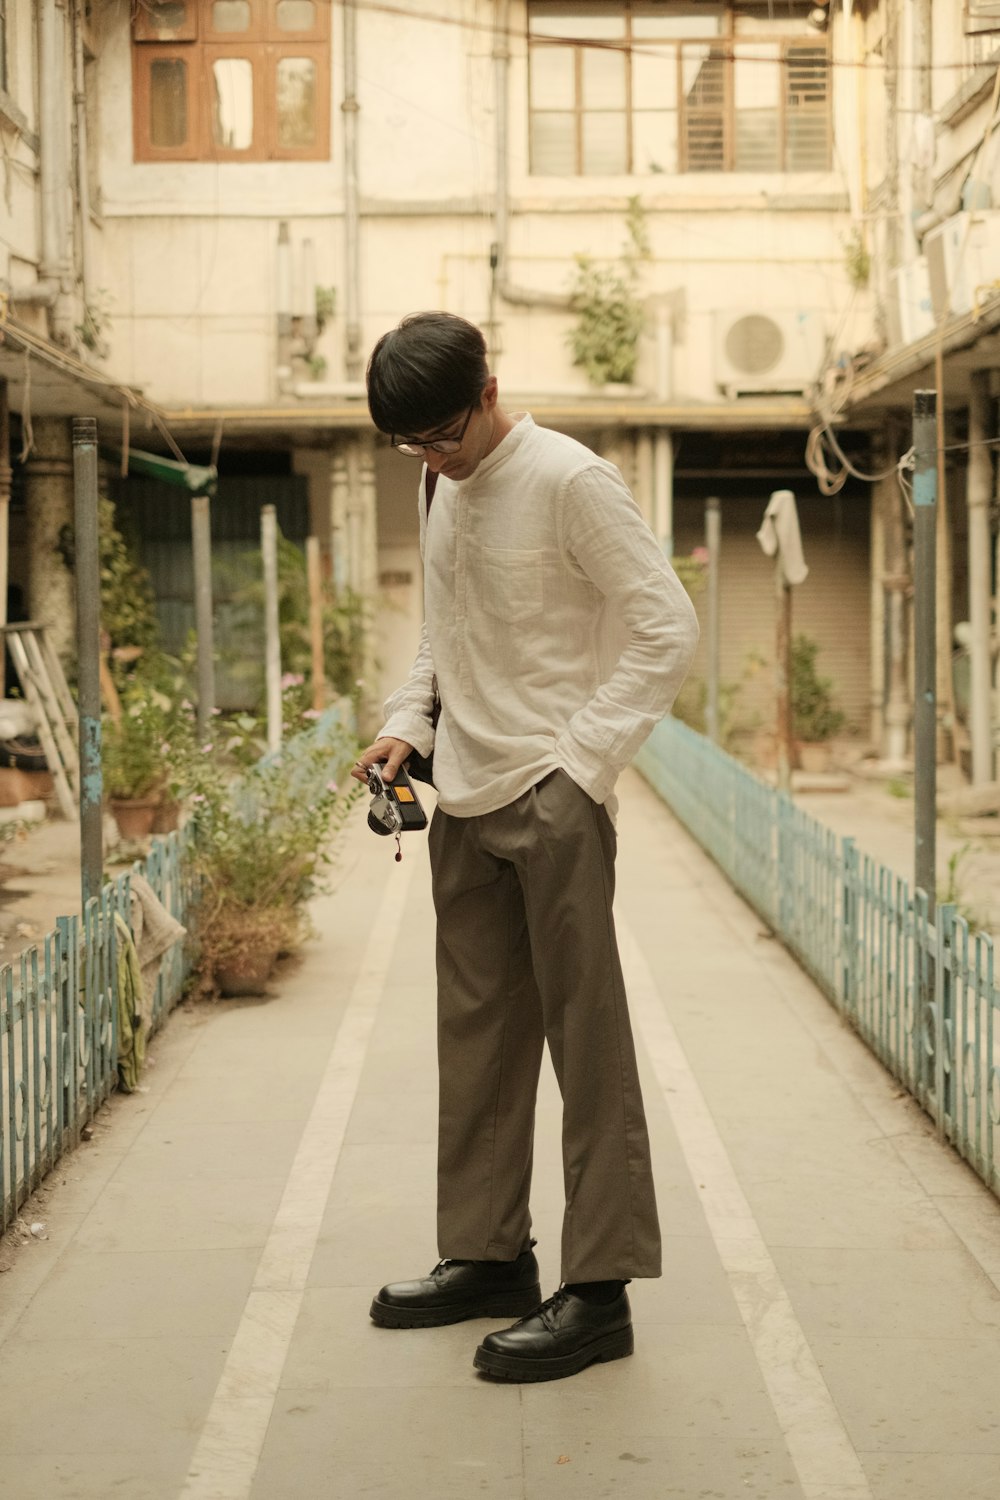 Un uomo in piedi su un marciapiede con in mano una macchina fotografica